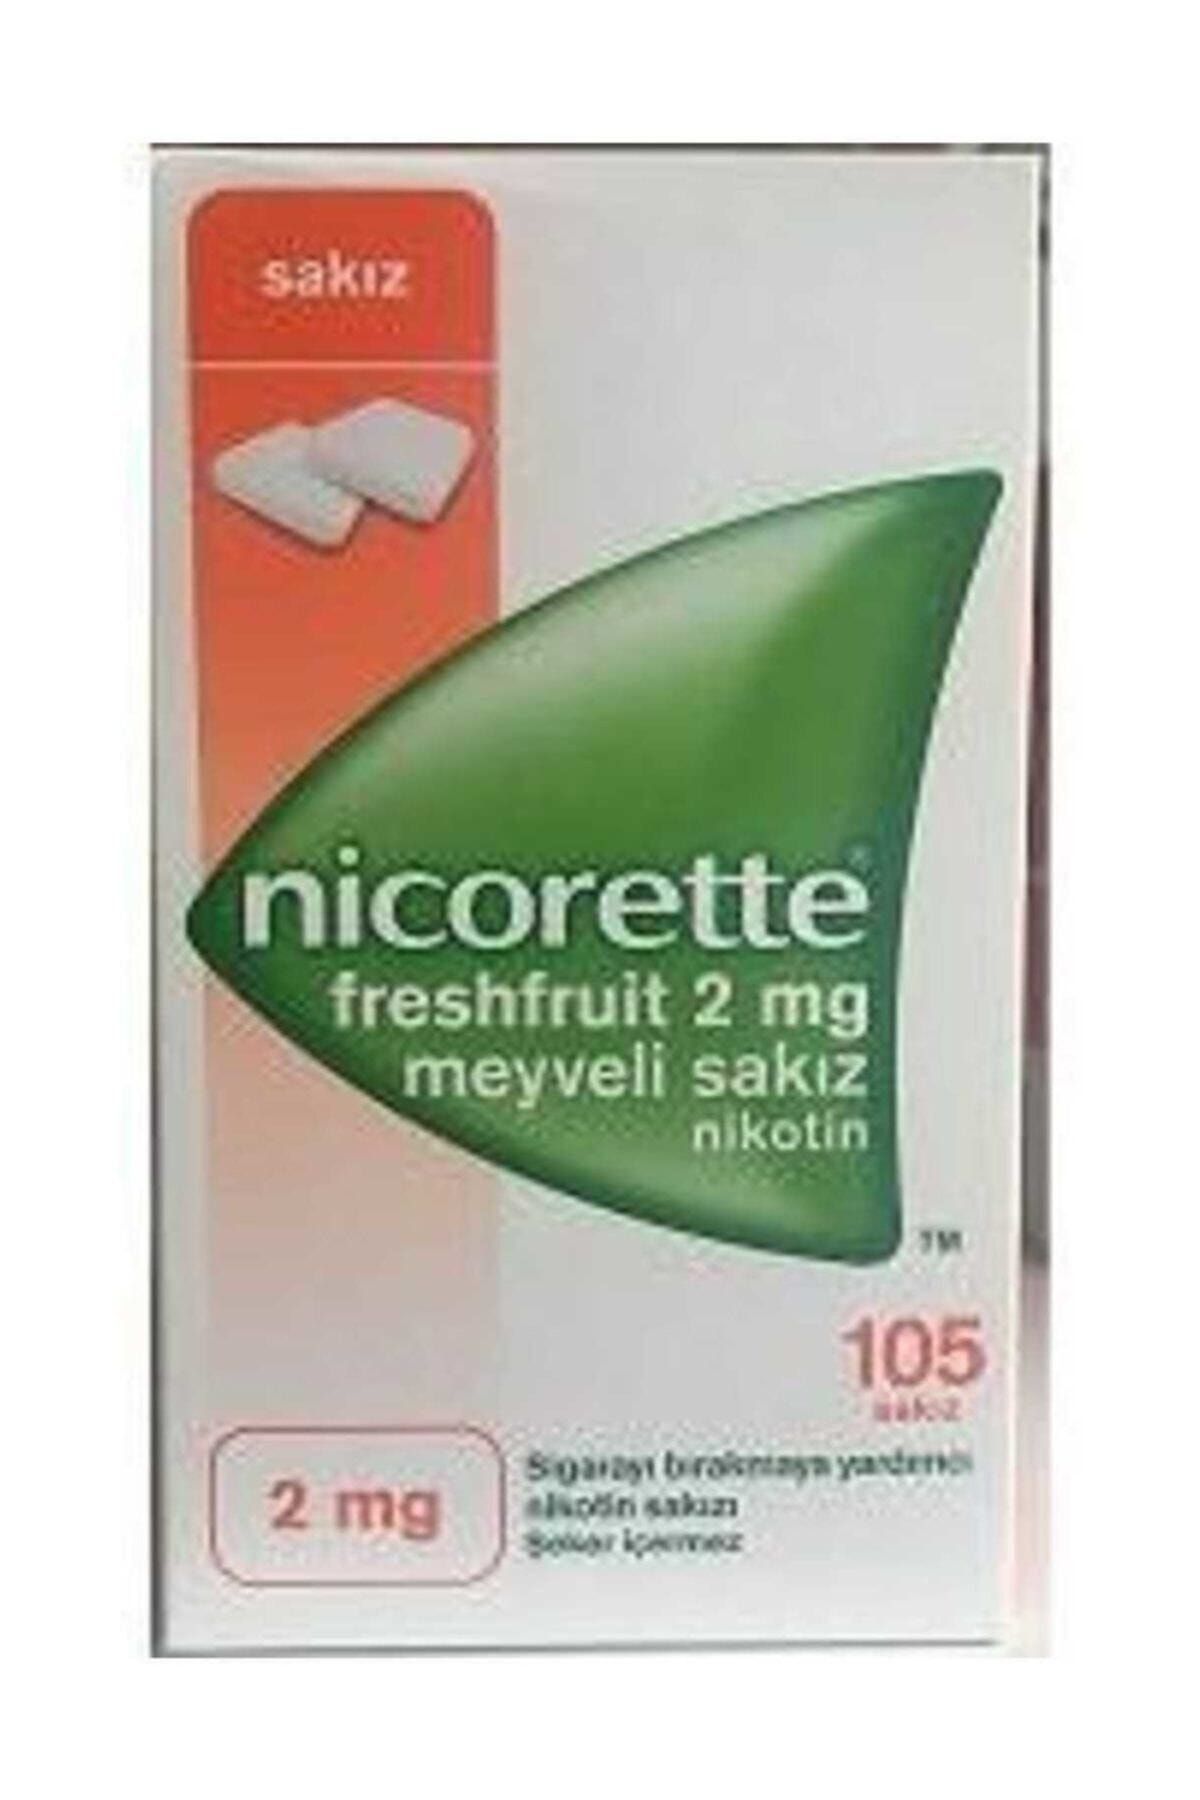 Nicorette Freshfruit 2mg Meyveli 105 Sakız Nikotin 8699593233326